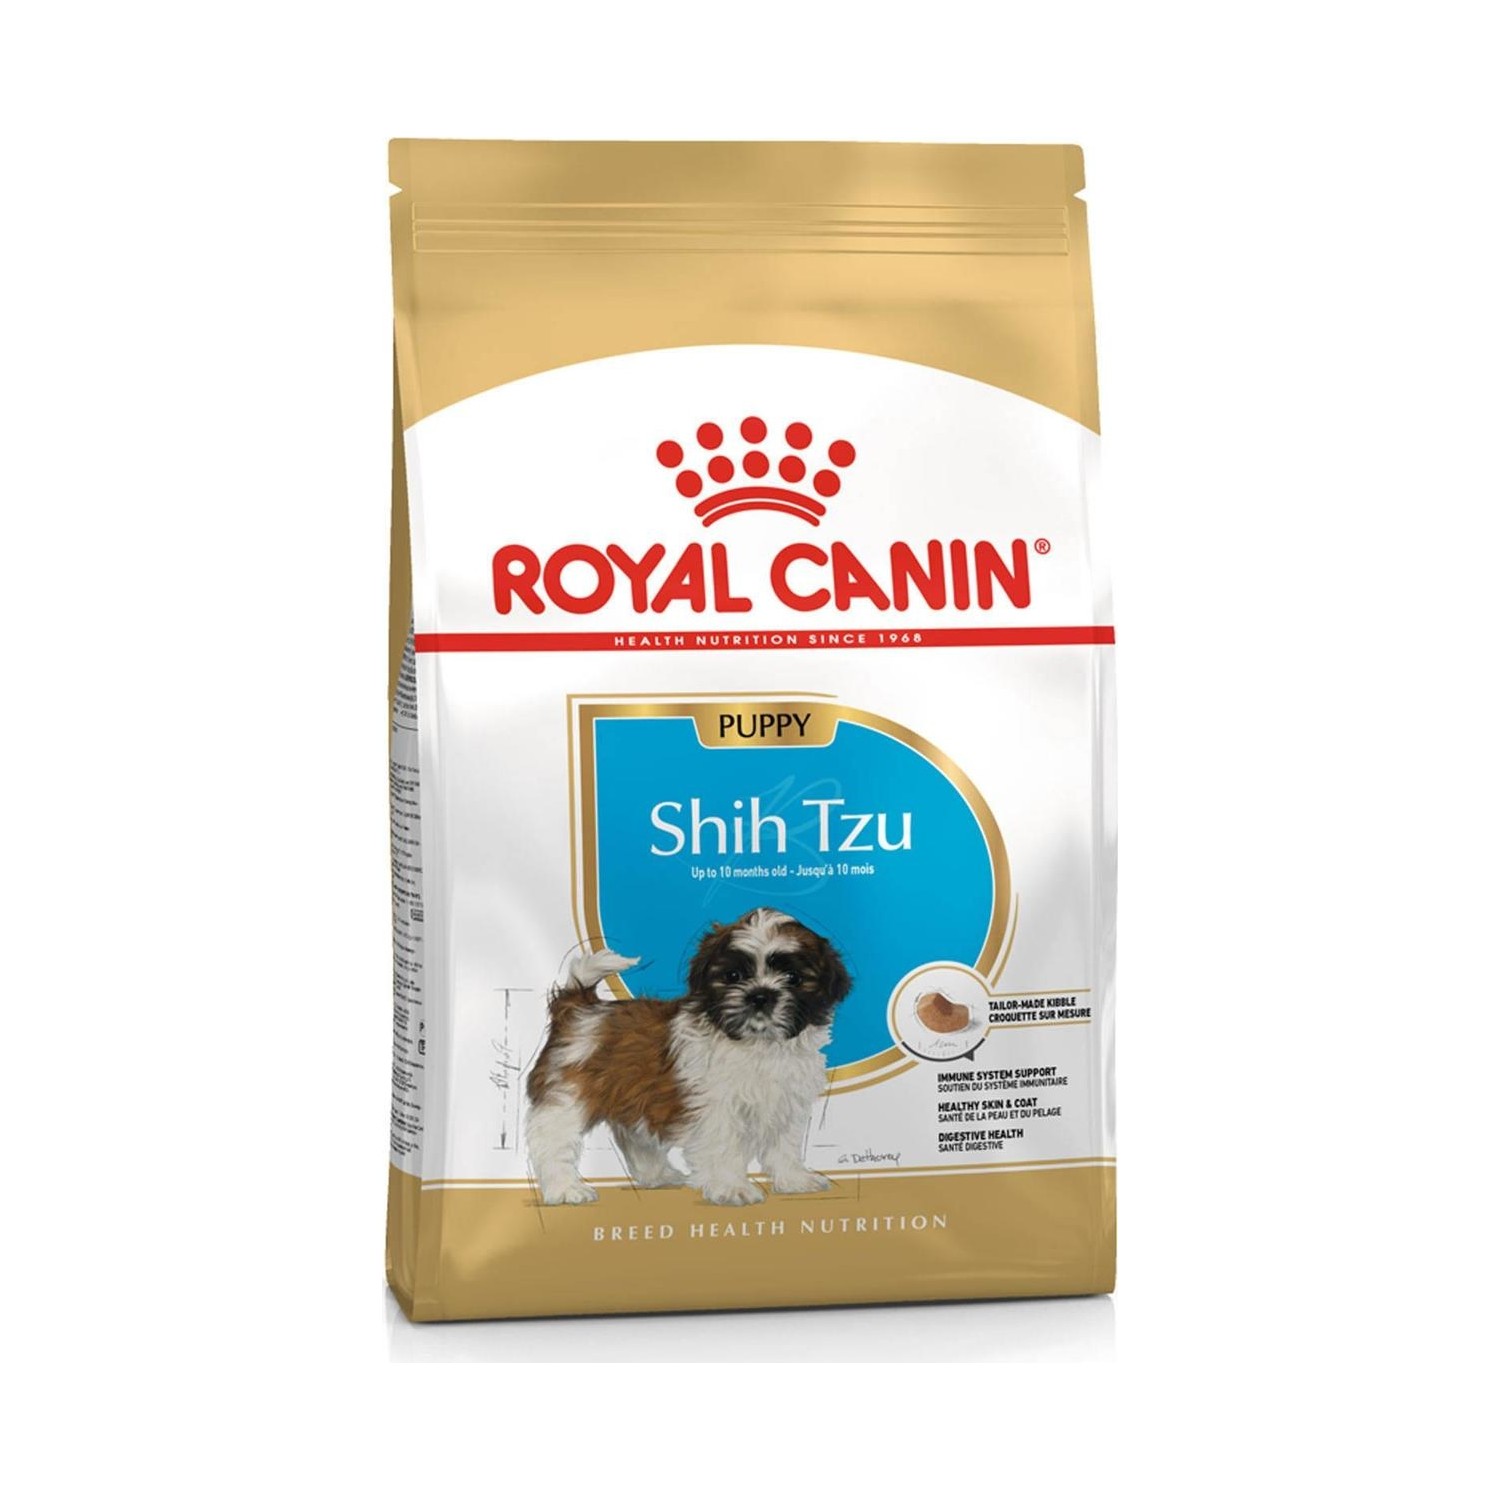 Royal Canin Shih Tzu Puppy Yavru Kopek Mamasi 1 5 Kg Fiyati